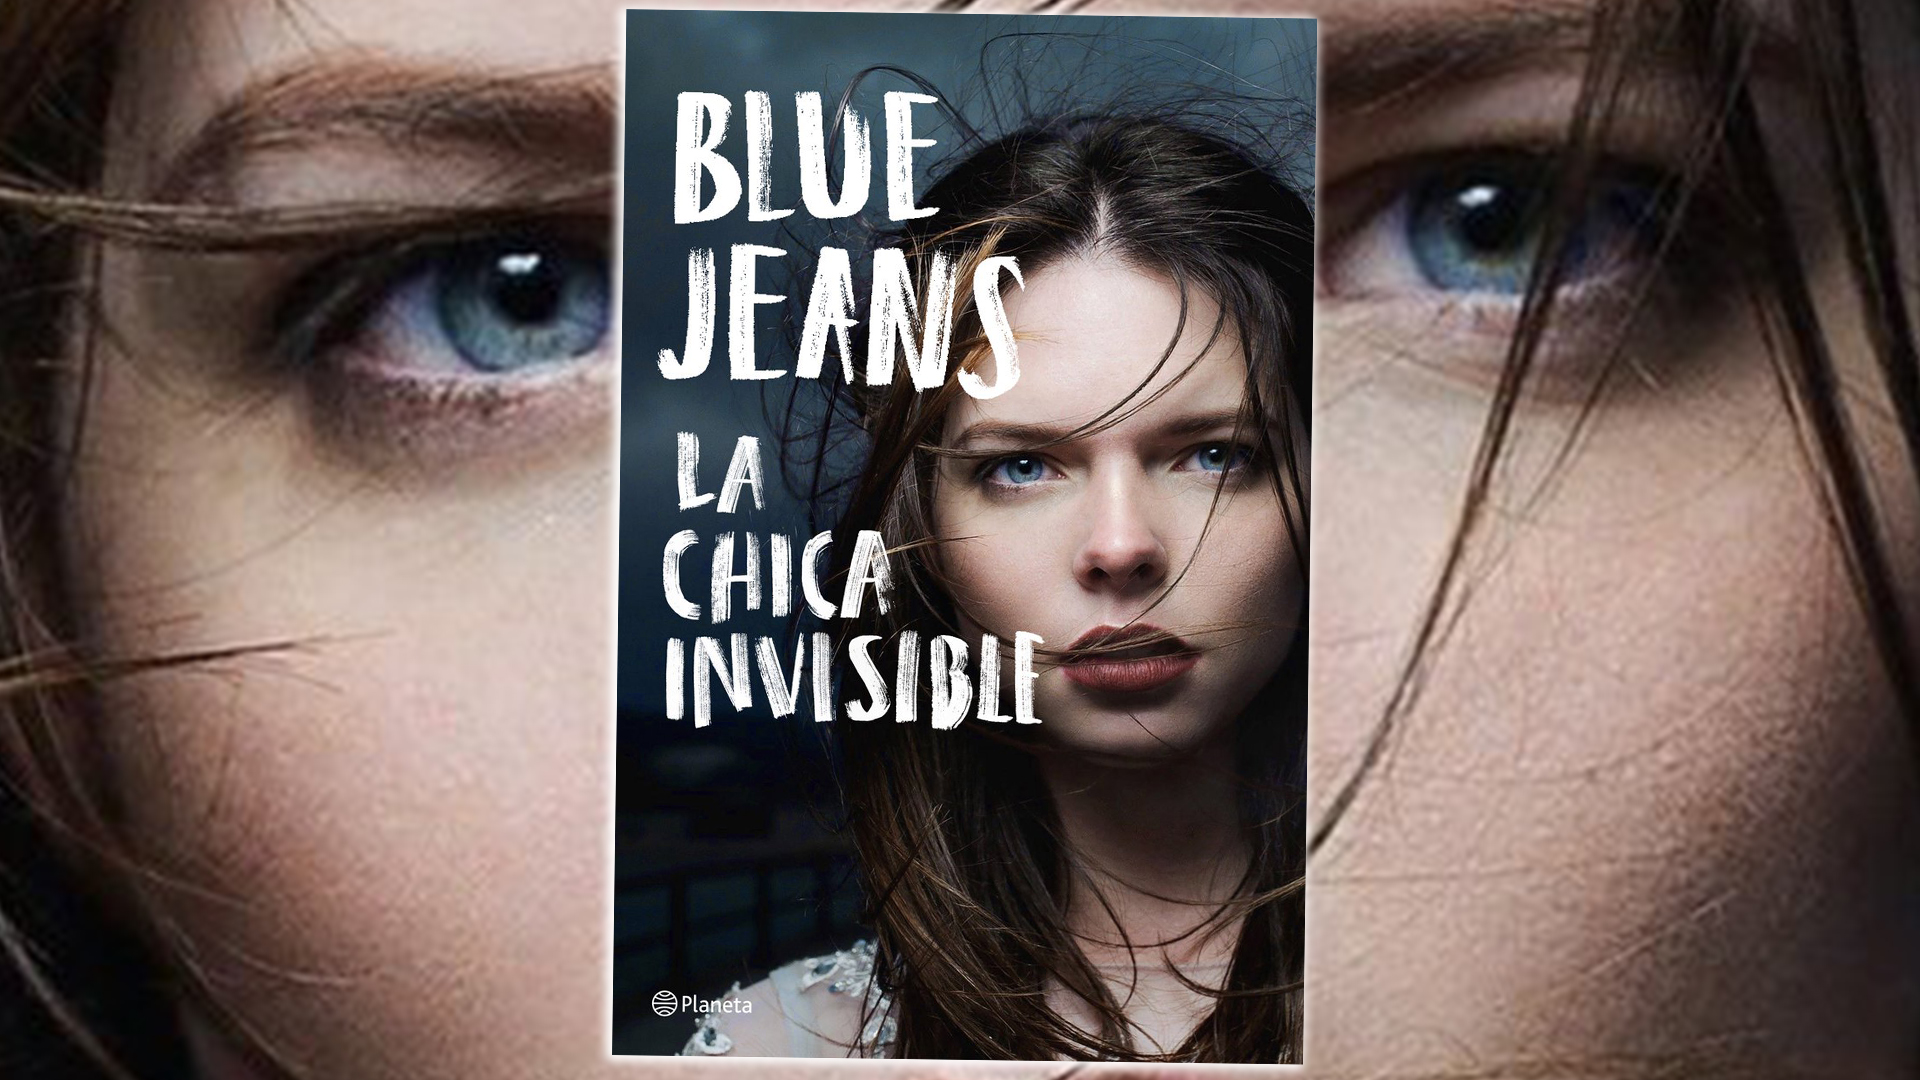 La trilogía de Blue Jeans “La chica invisible” llegará a Netflix